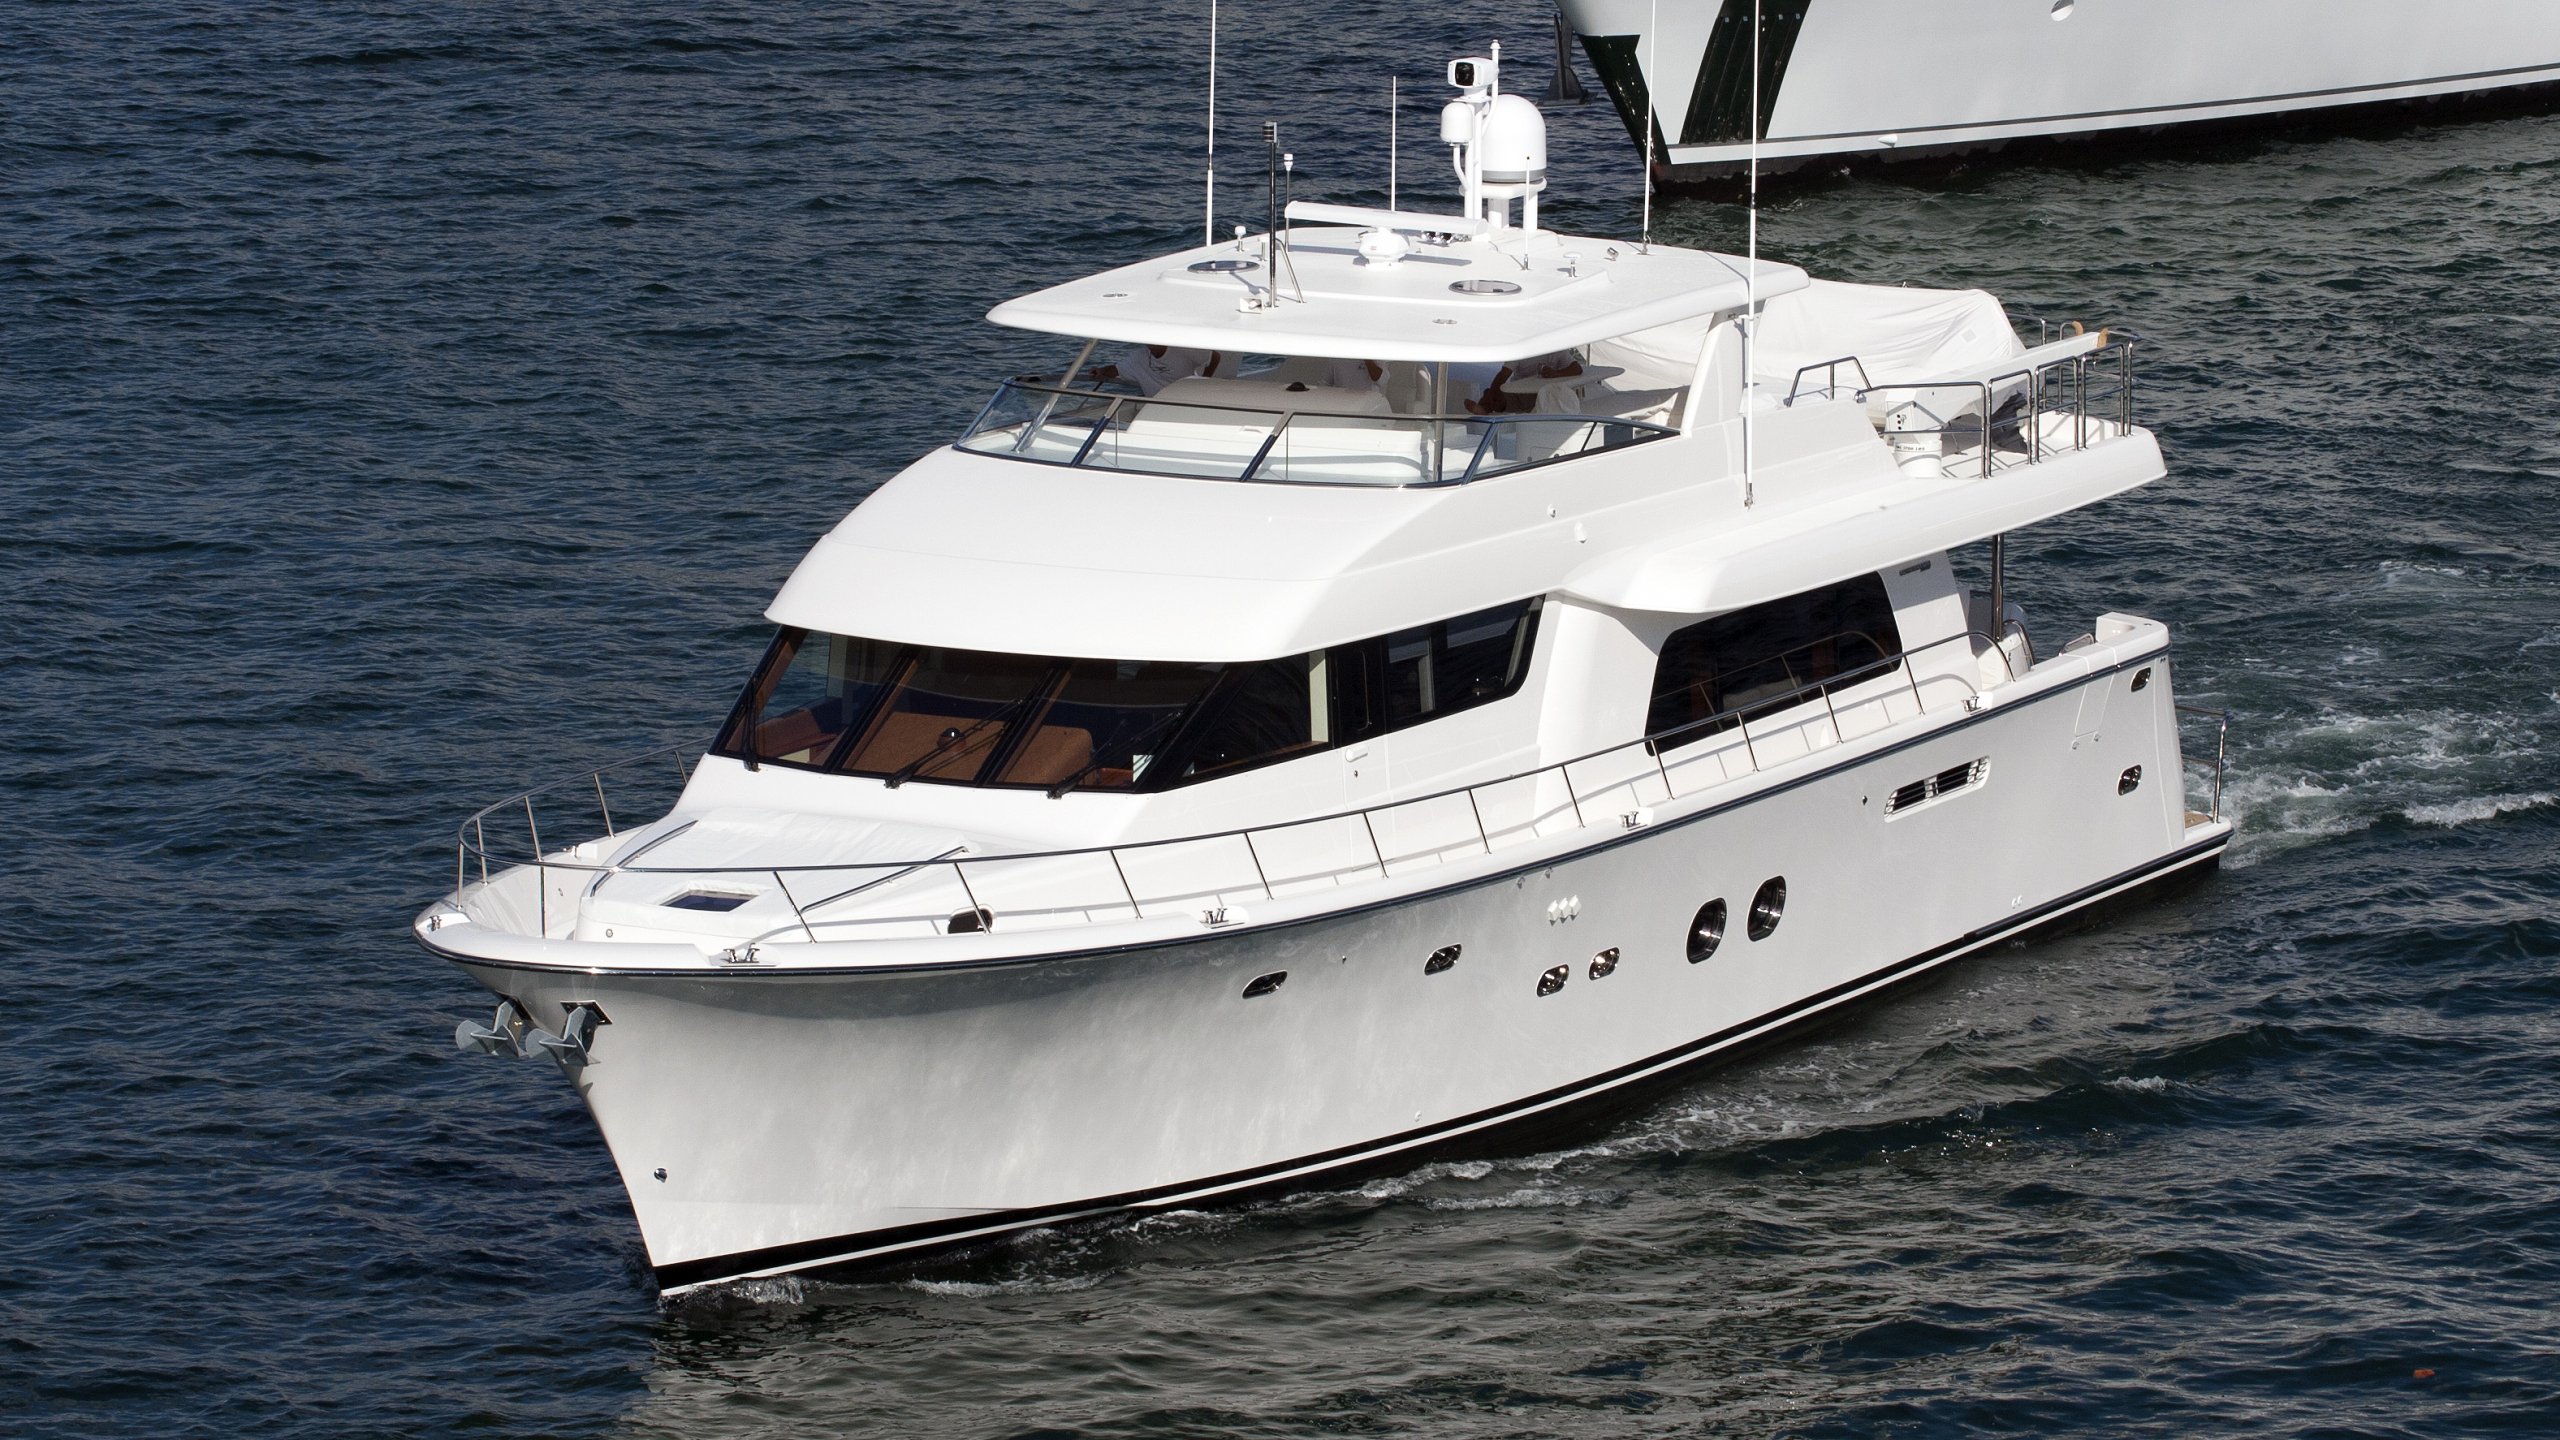 BOSSMAN Yacht • Richard Schulze $5M Superyacht • Pacific Mariner • 2012